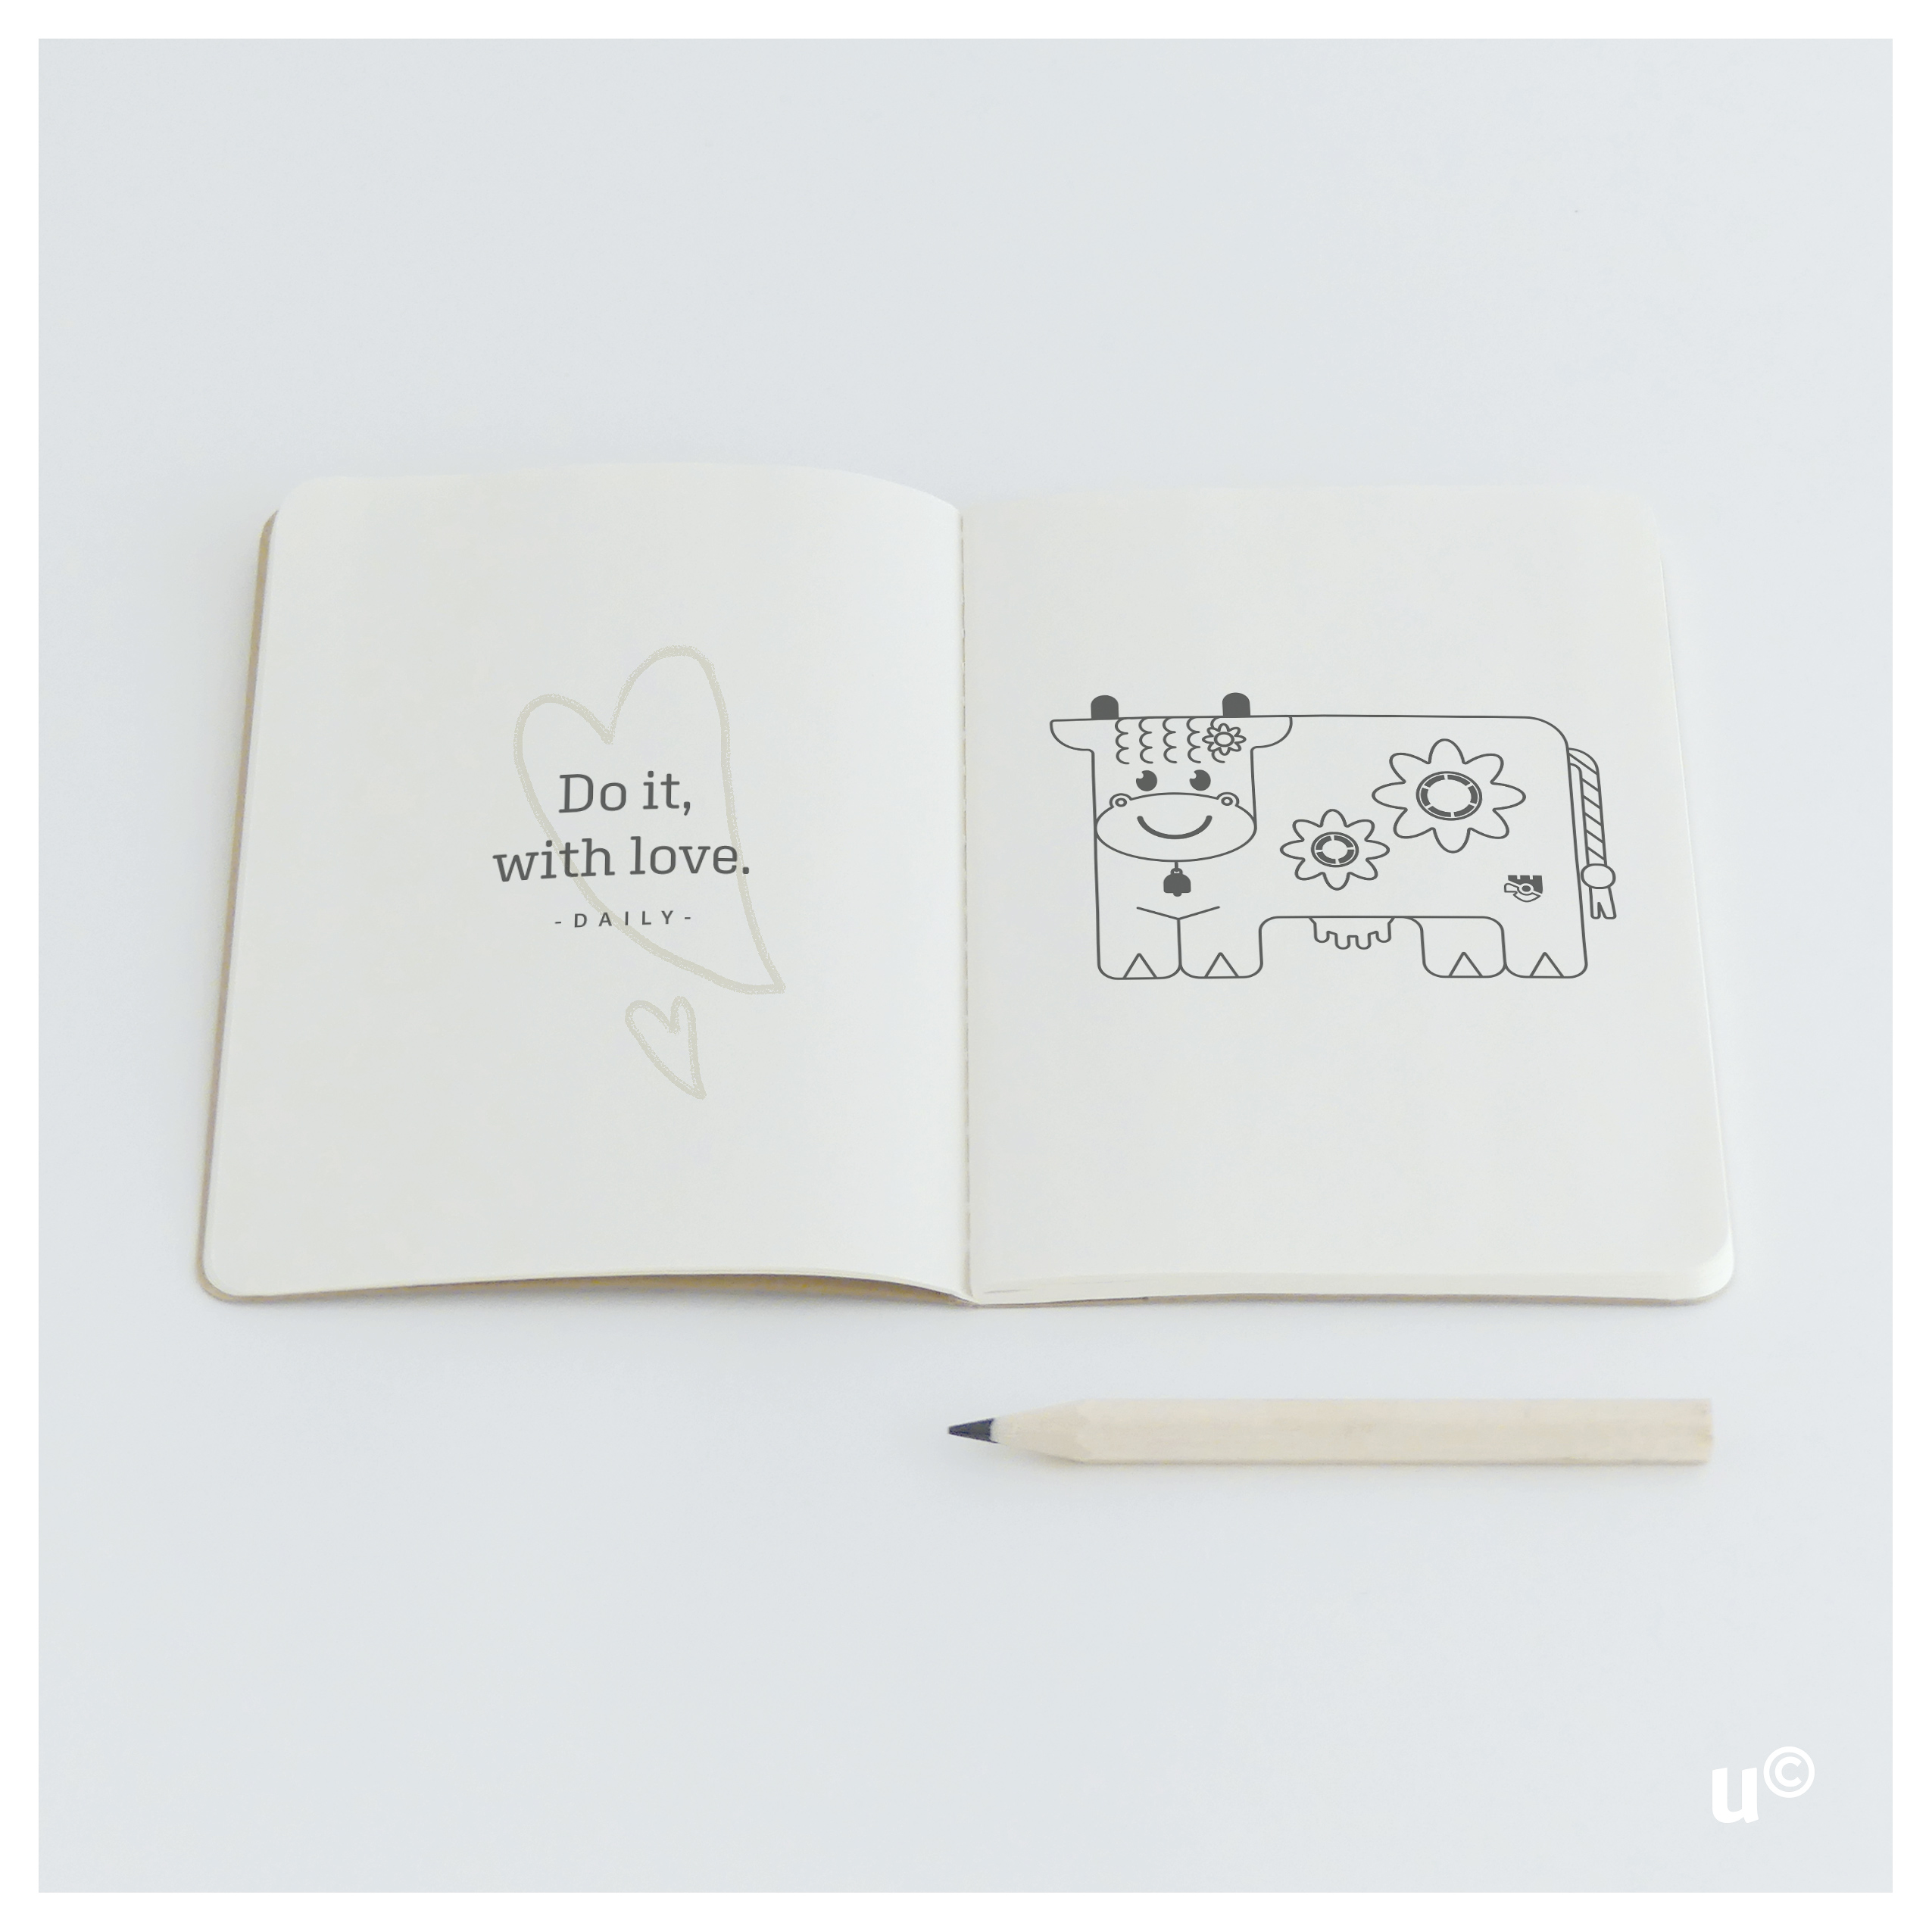 valtoi-sketchbook-do-it-with-love_instagram